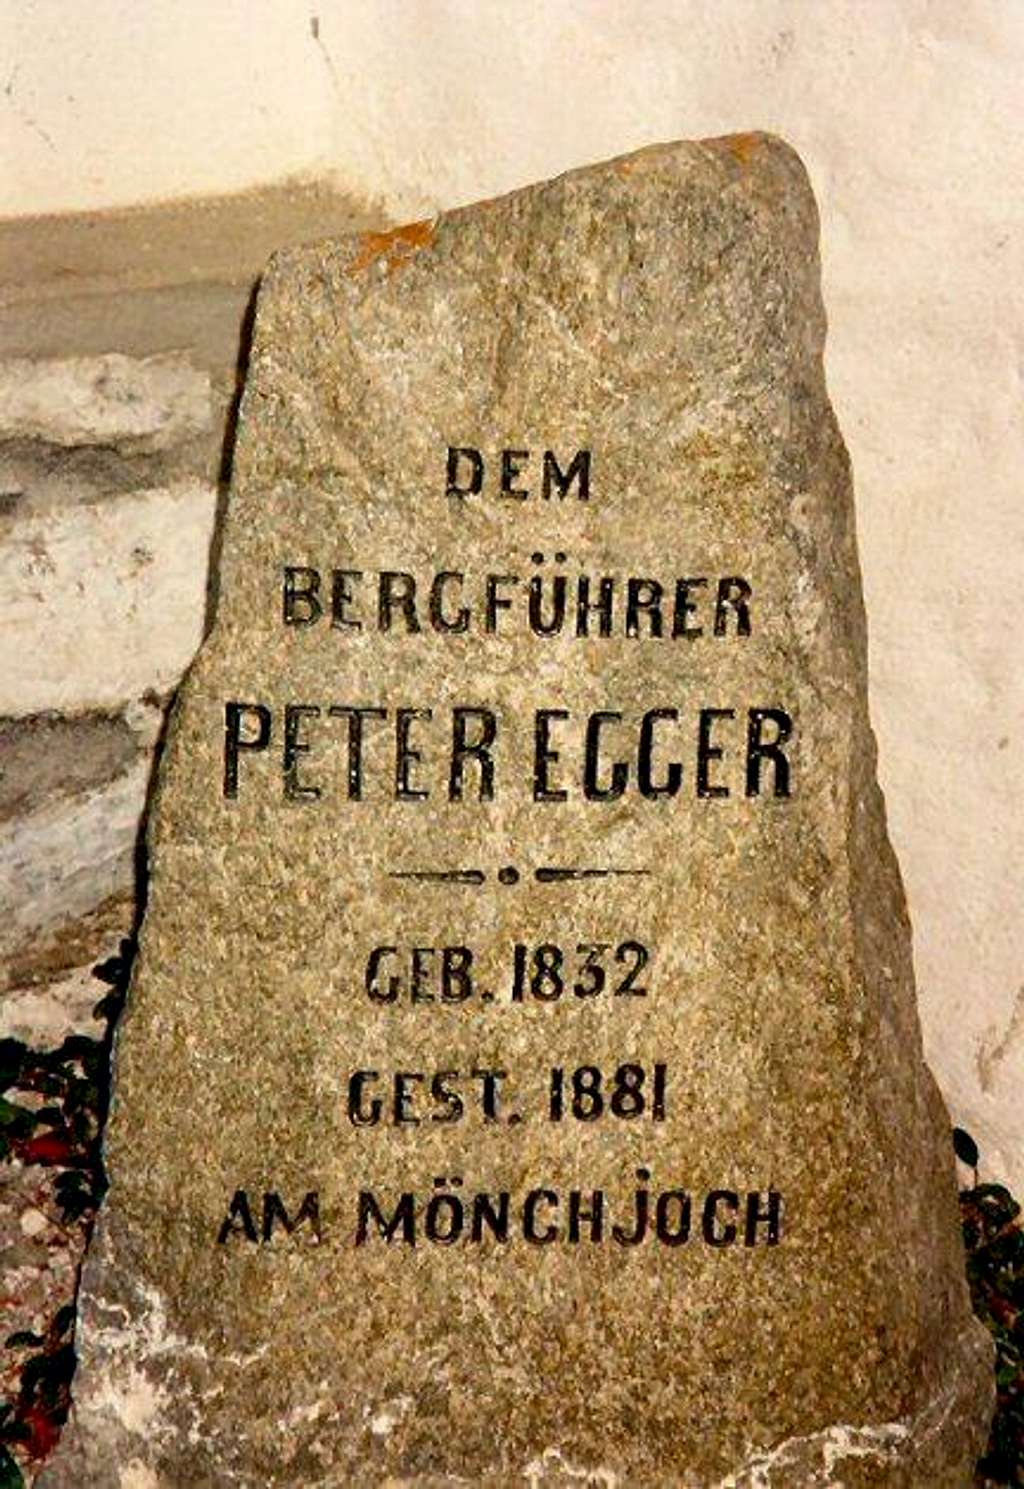 Peter Egger…